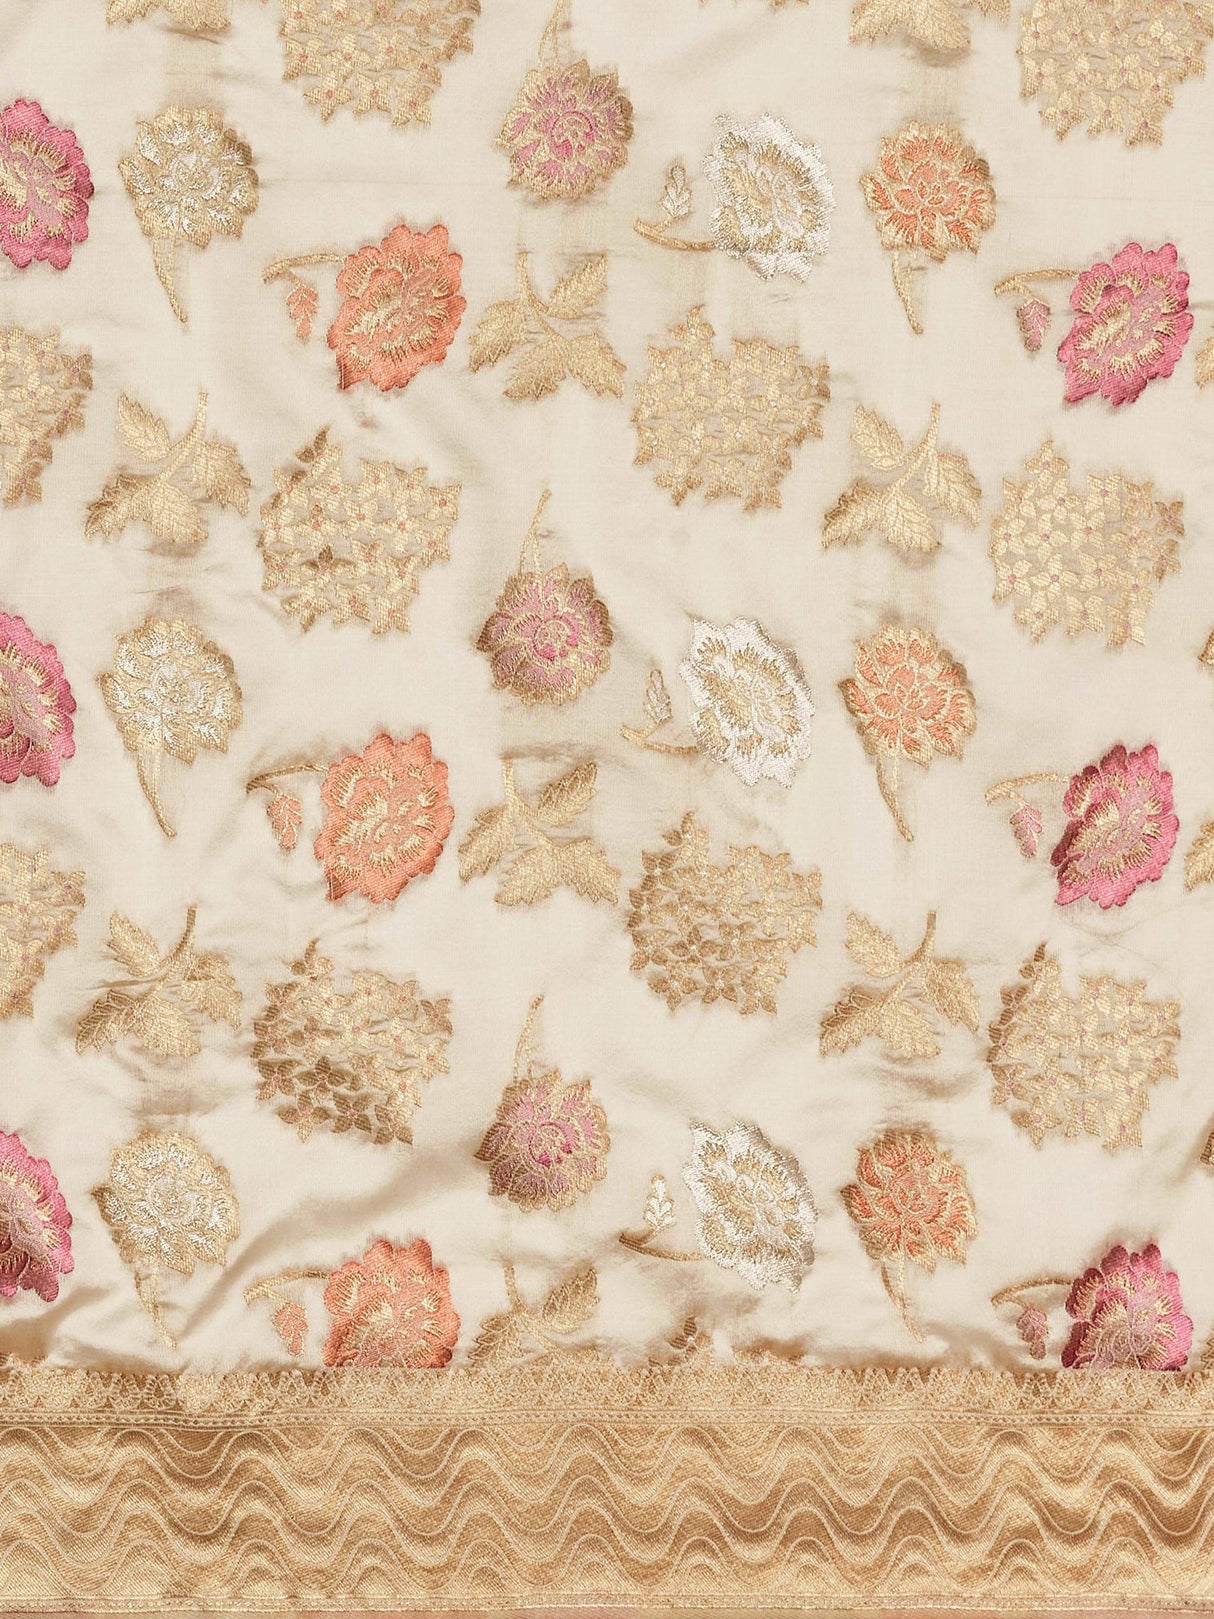 Mimosa Women's Woven Design Kanjivaram Art Silk Saree With Blouse Piece : SA00001058HW